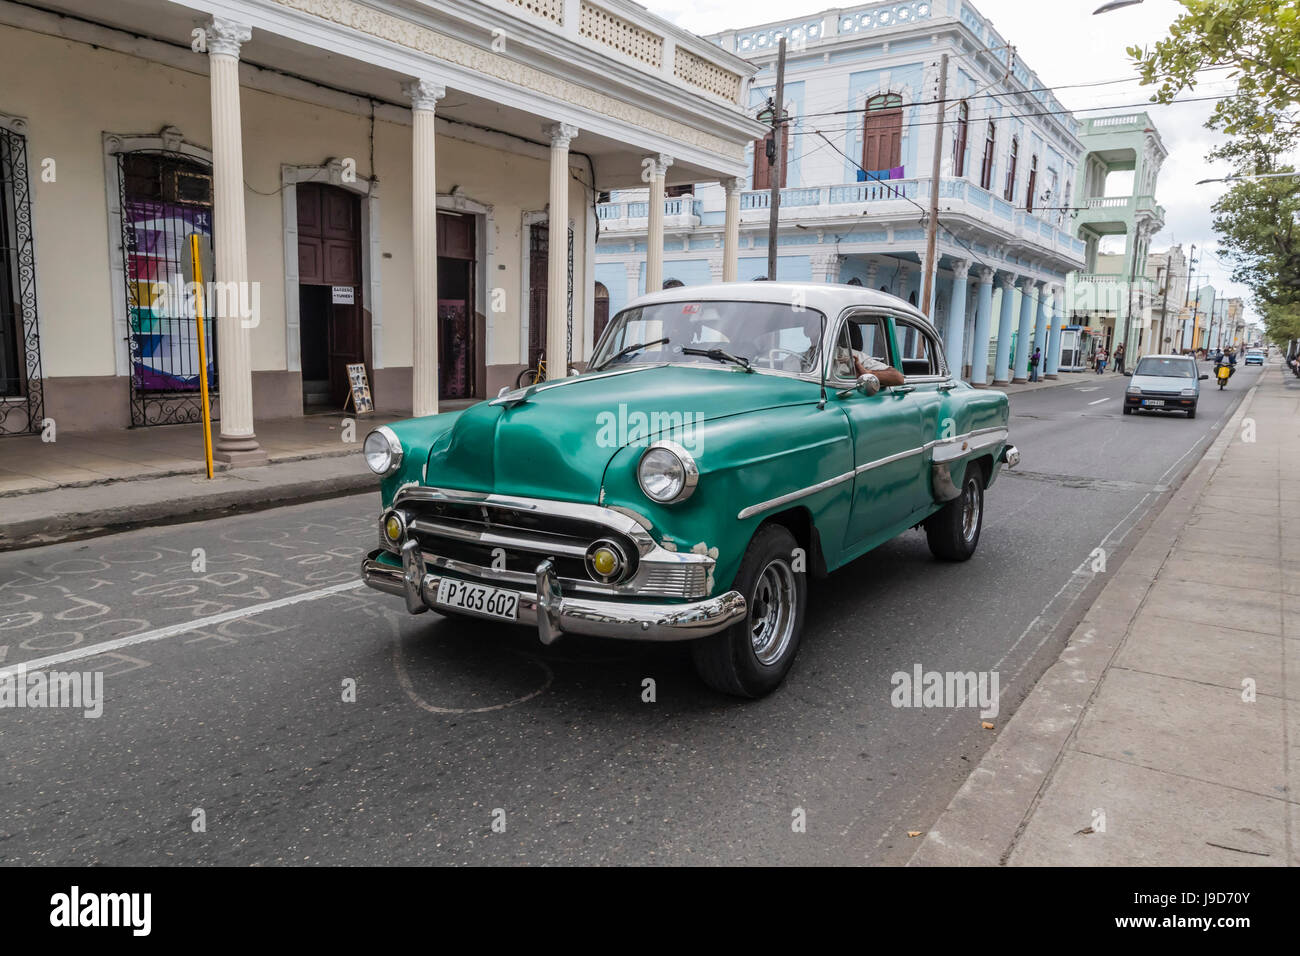 Classic 1950 Chevrolet Bel Air Taxi, connu localement comme almendrones dans la ville de Cienfuegos, Cuba, Antilles, Caraïbes Banque D'Images